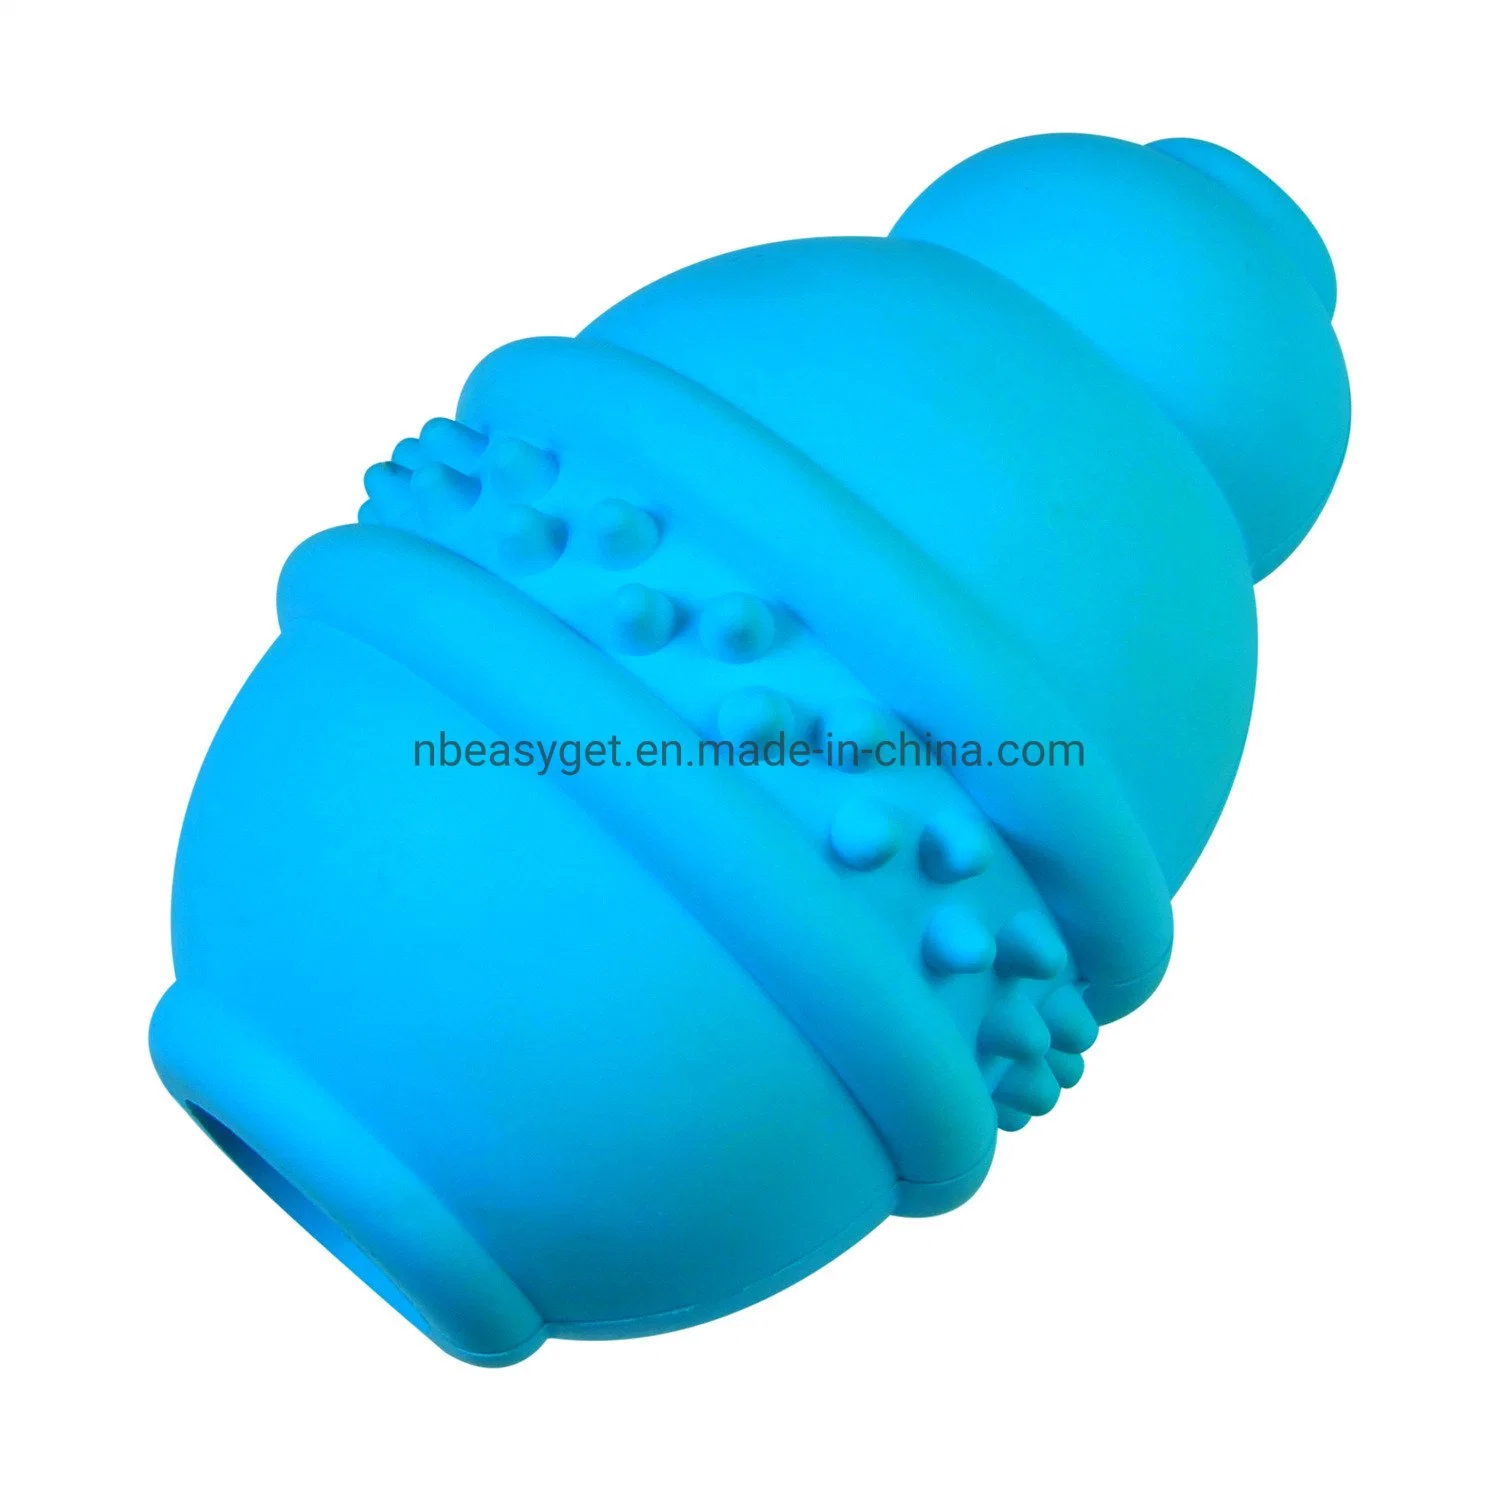 Fuite chien pot rond forme de bouteille Chew jouets teething agressif Edg12795